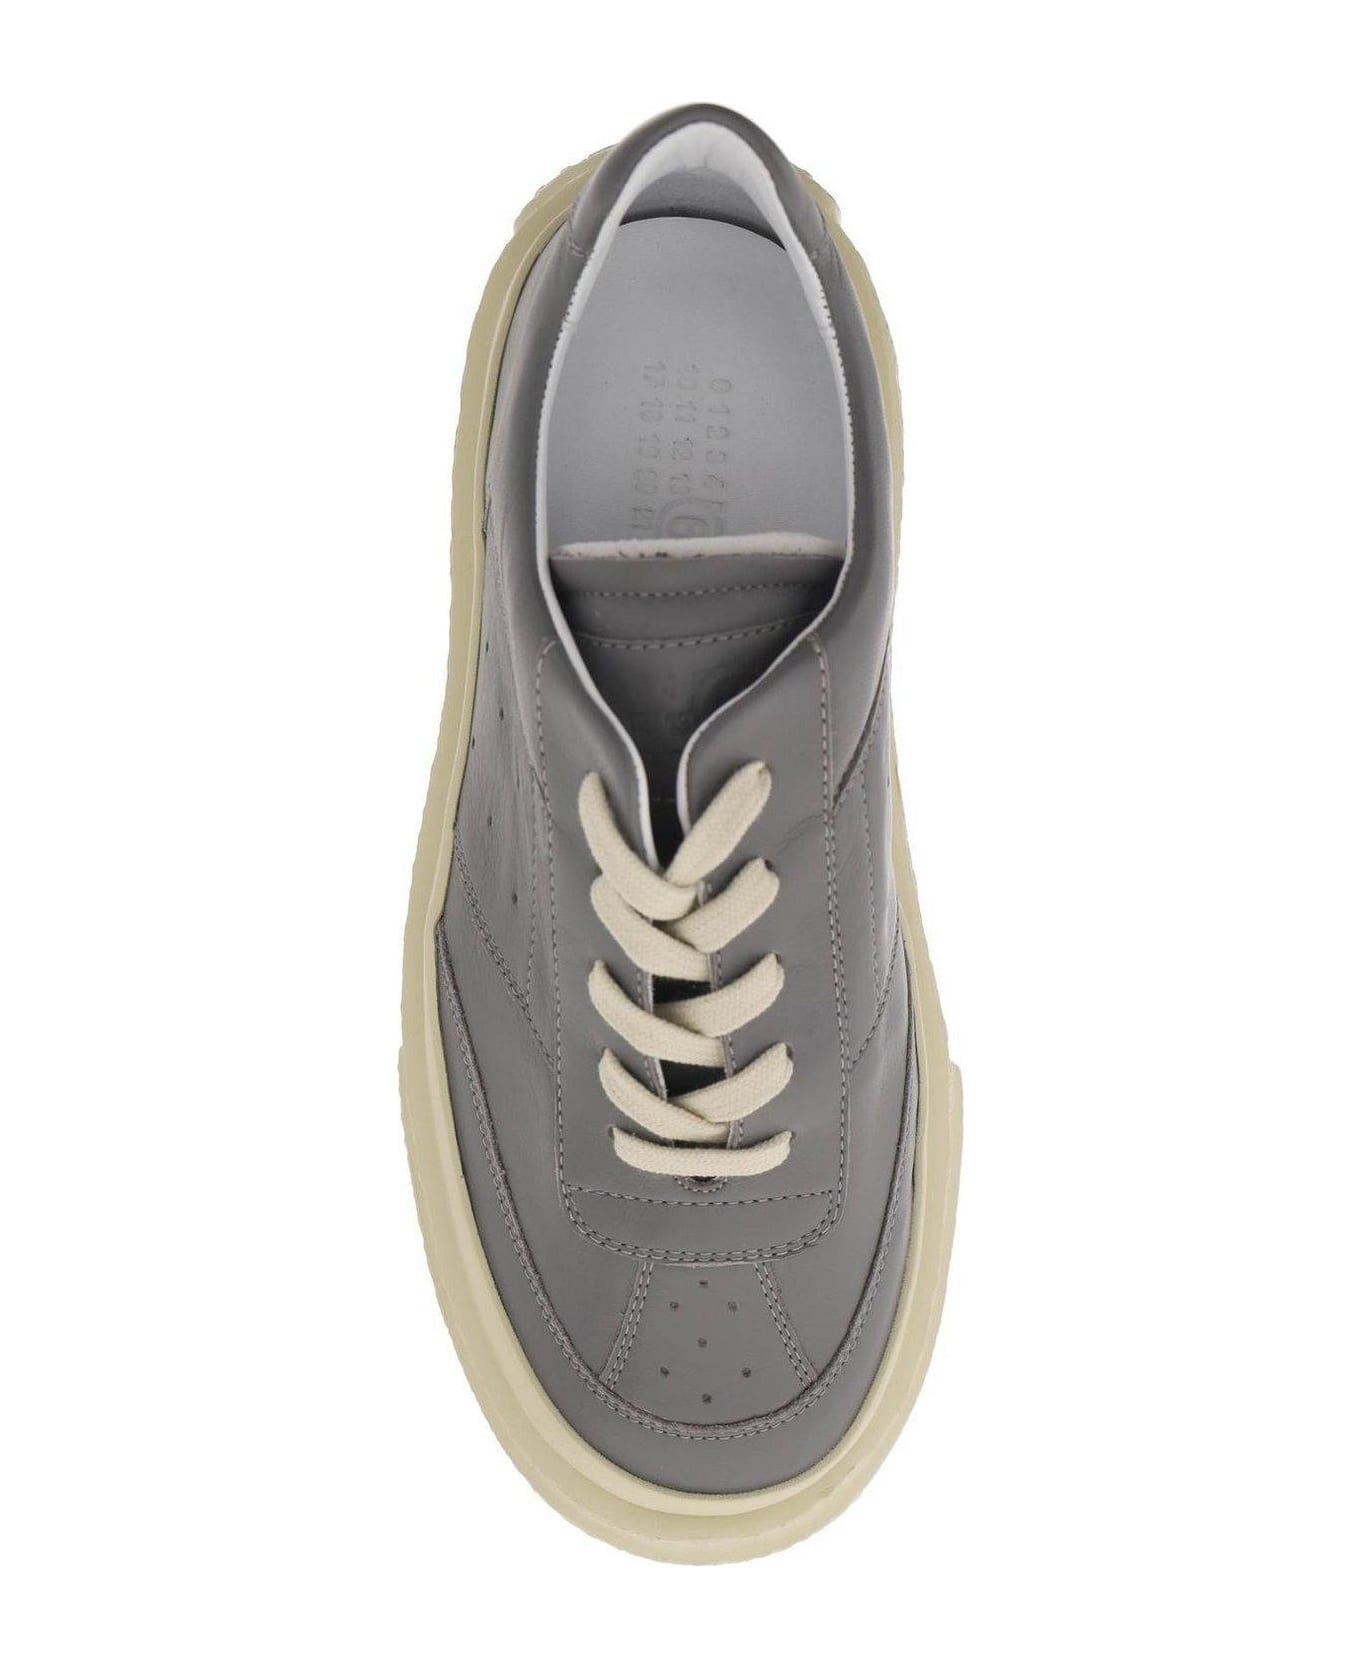 MM6 Maison Margiela Round Toe Platform Sneakers - CHARCOAL GRAY (Grey) ウェッジシューズ